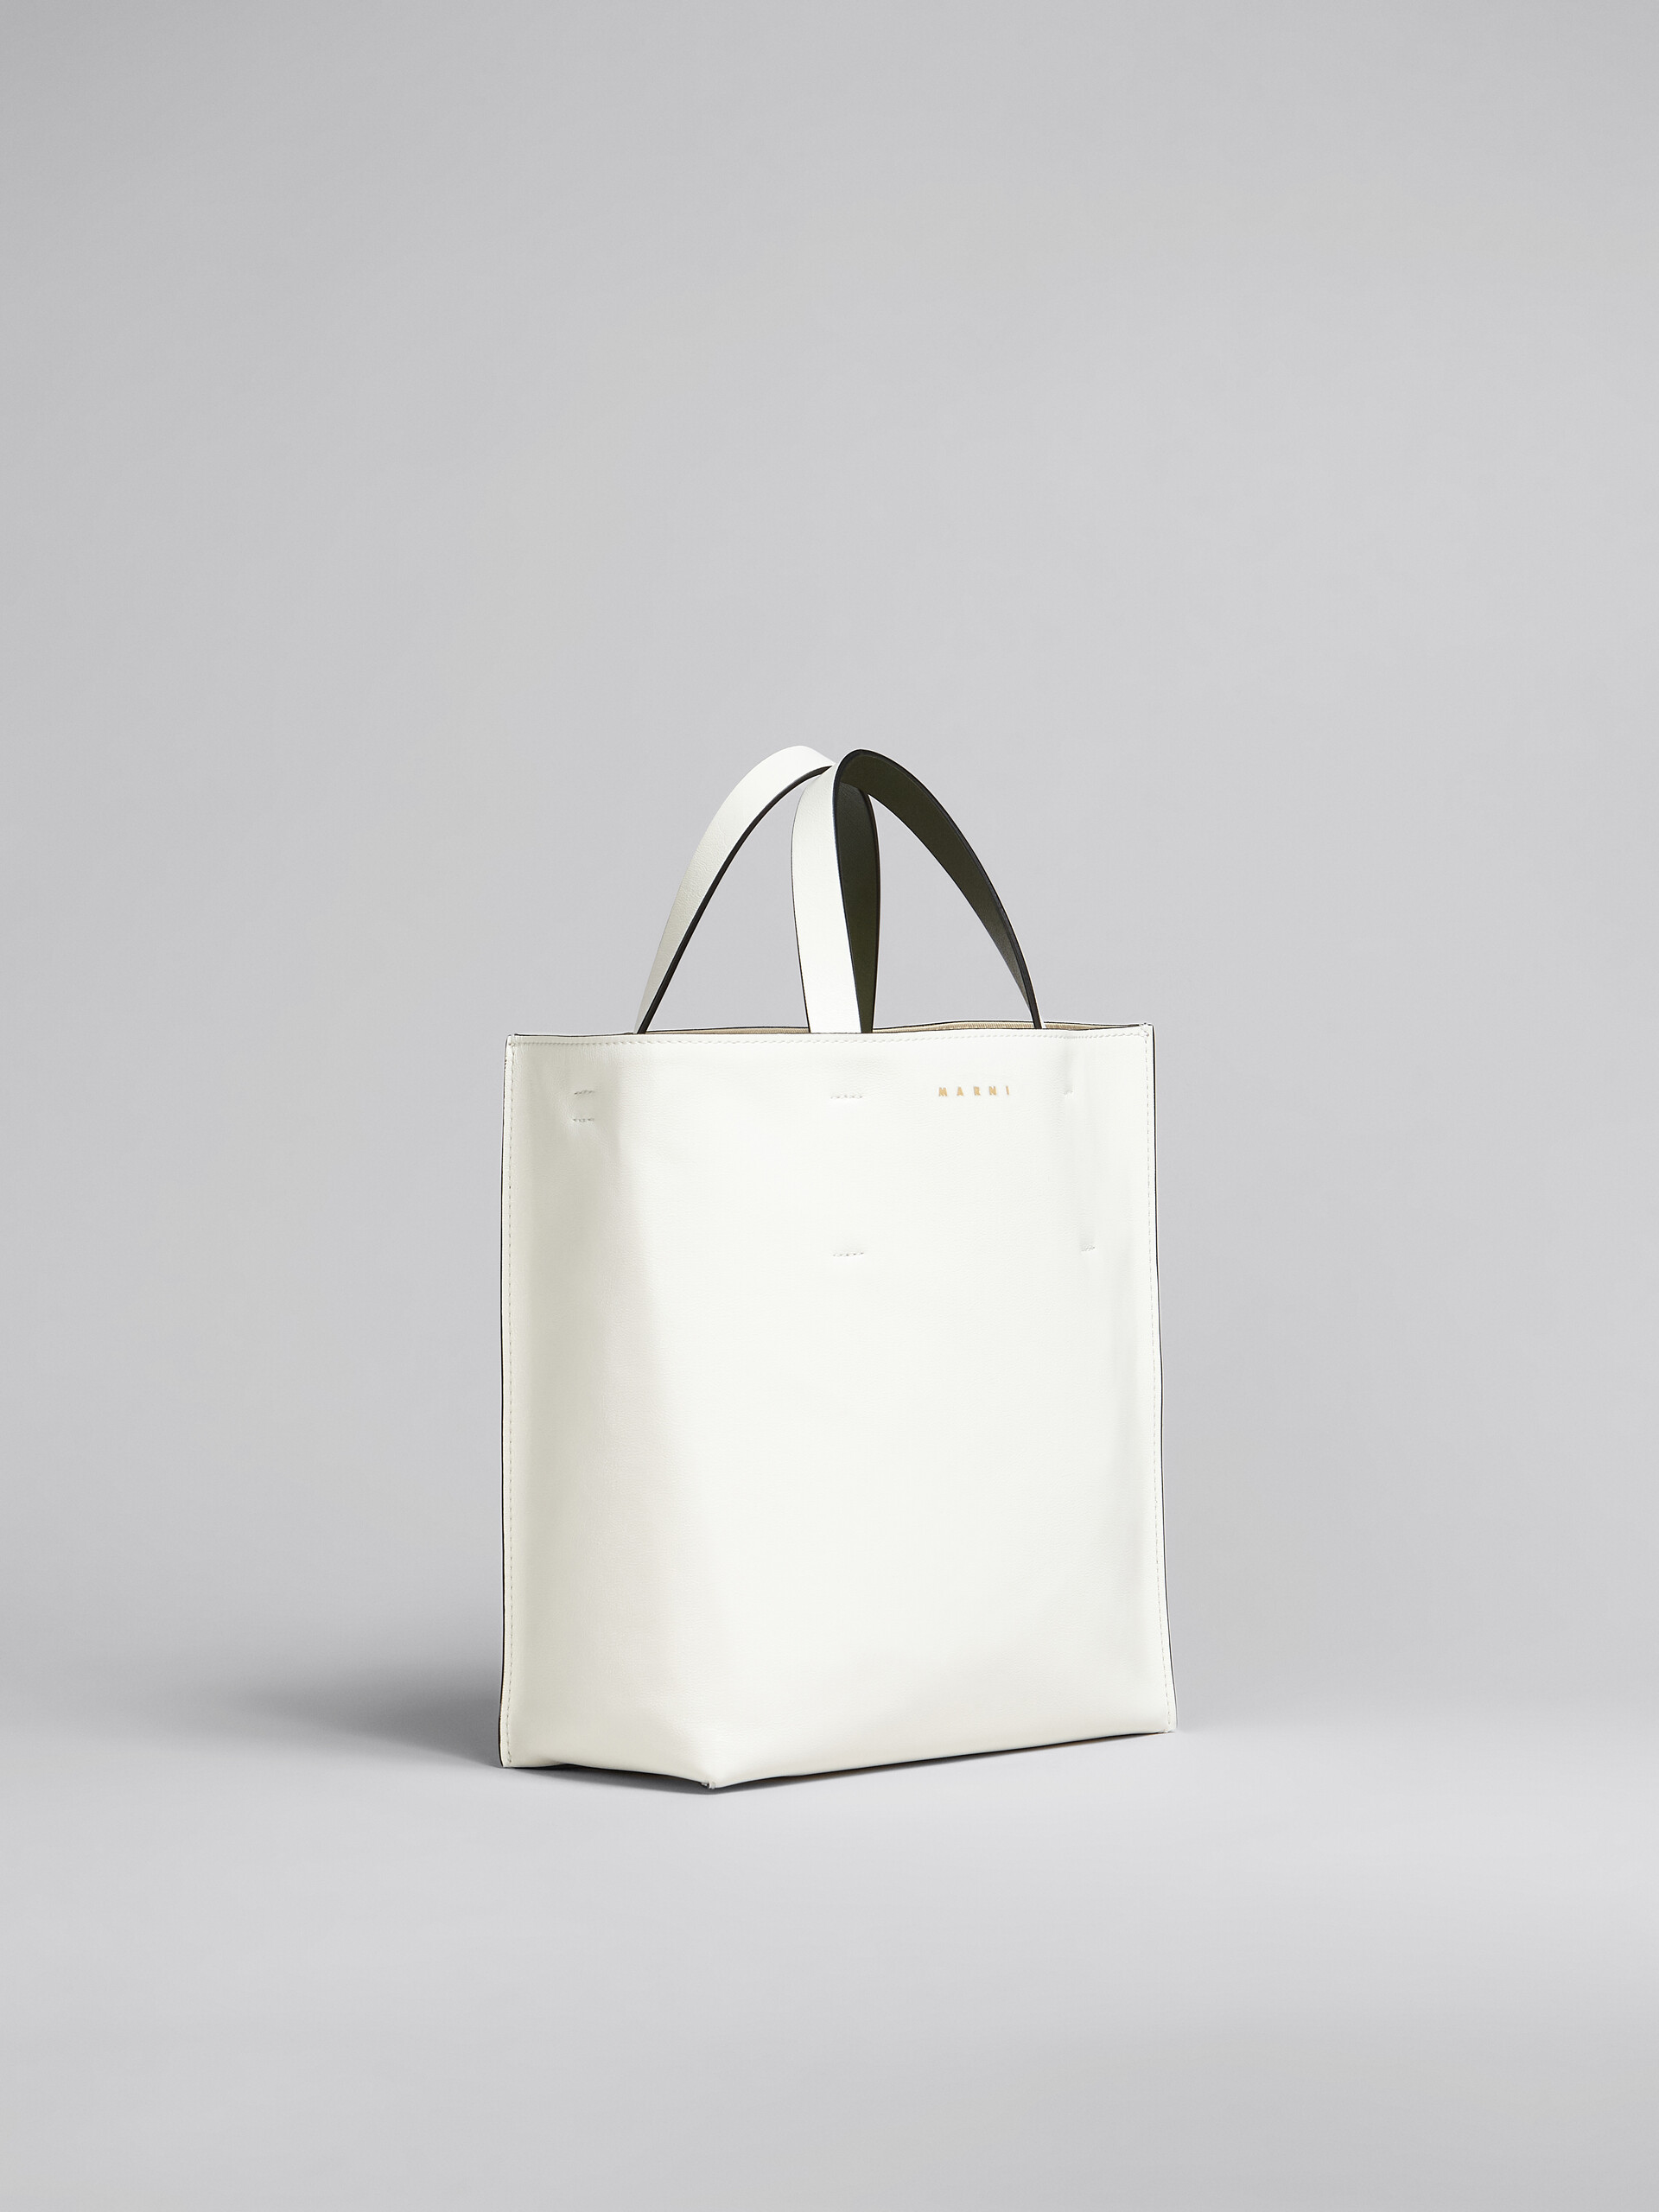 Museo Soft Bag Piccola in pelle nera e bianca - Borse shopping - Image 6